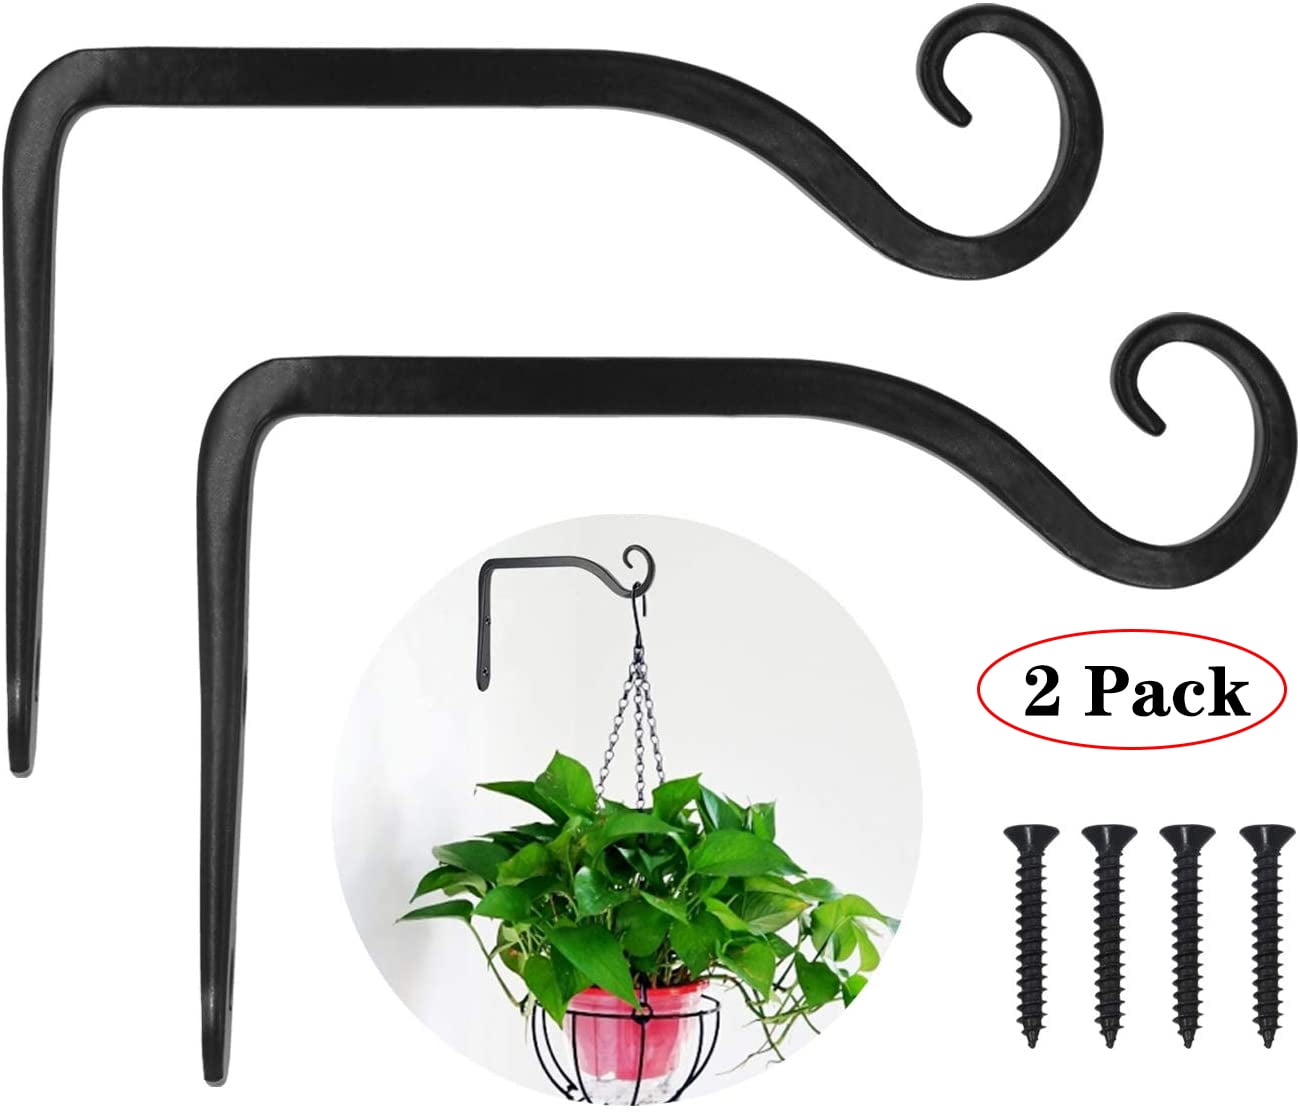 LNGOOR 2 Pack Decorative Iron Wall Hooks Metal Lantern Bracket Hanger for Hanging  Plants,Bird Feeders, Wind Chimes,Indoor Outdoor,6 inch 